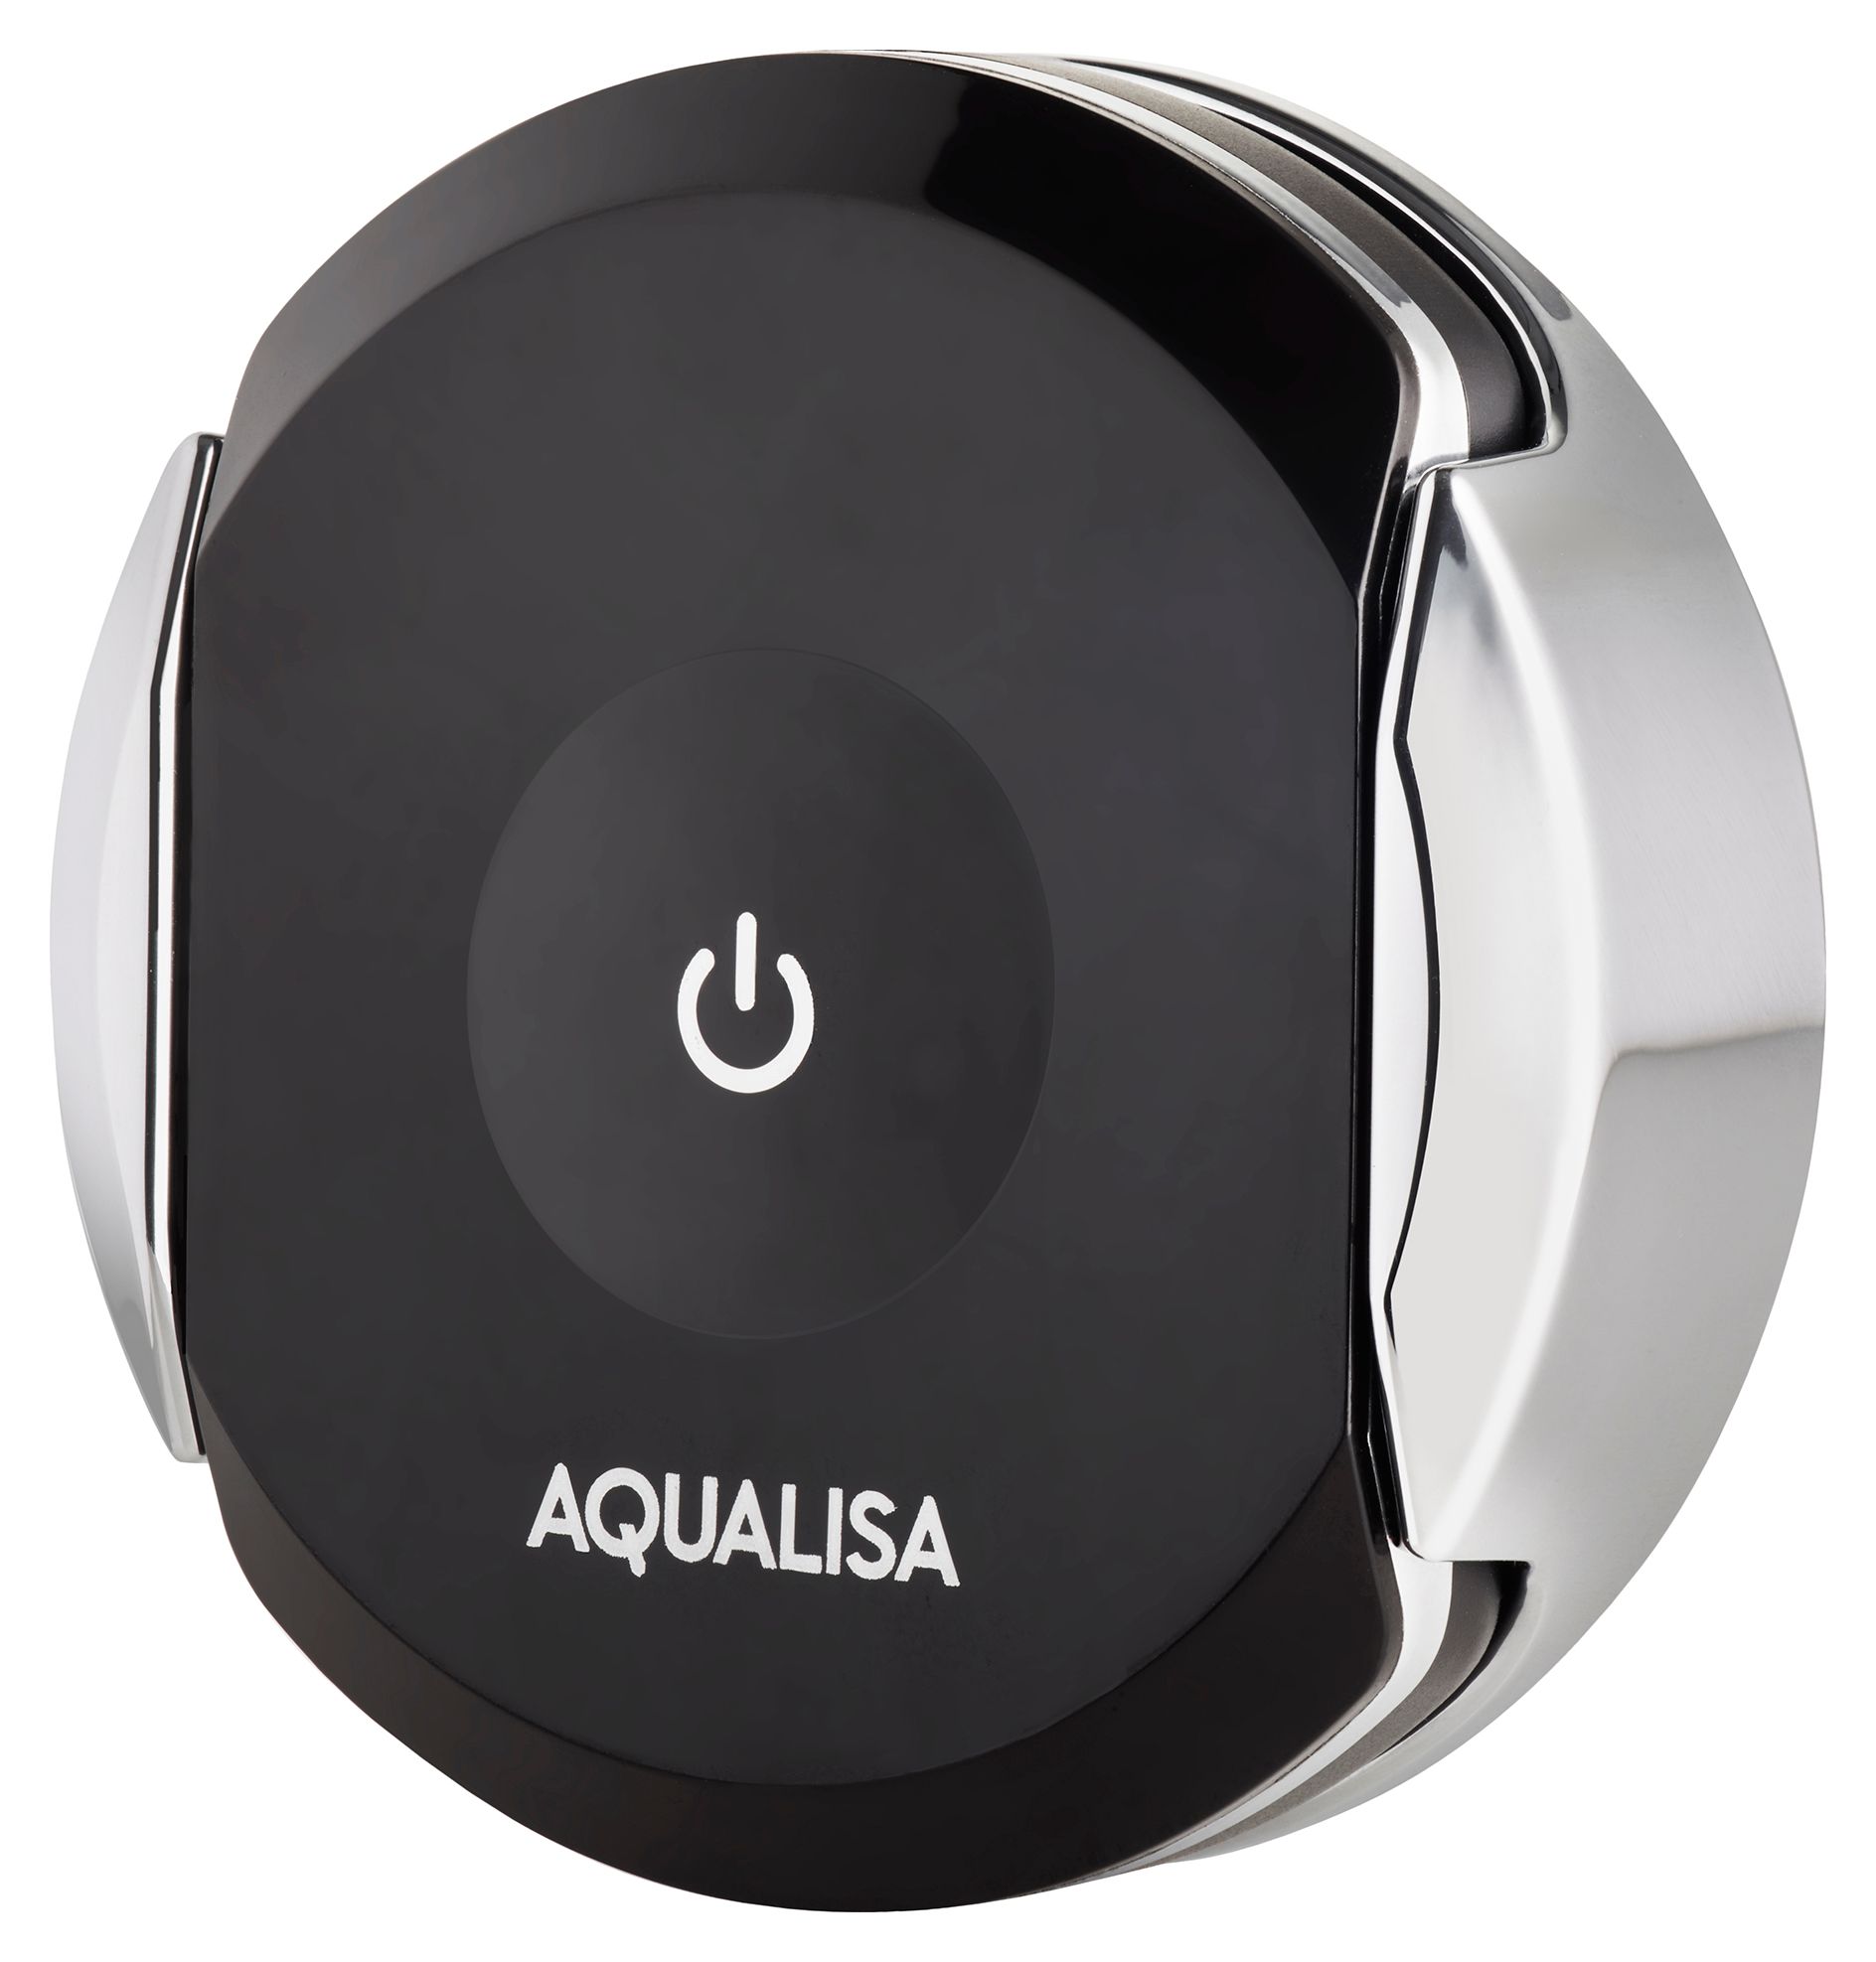 Image of Aqualisa Optic Q Smart Wireless Shower Remote Control